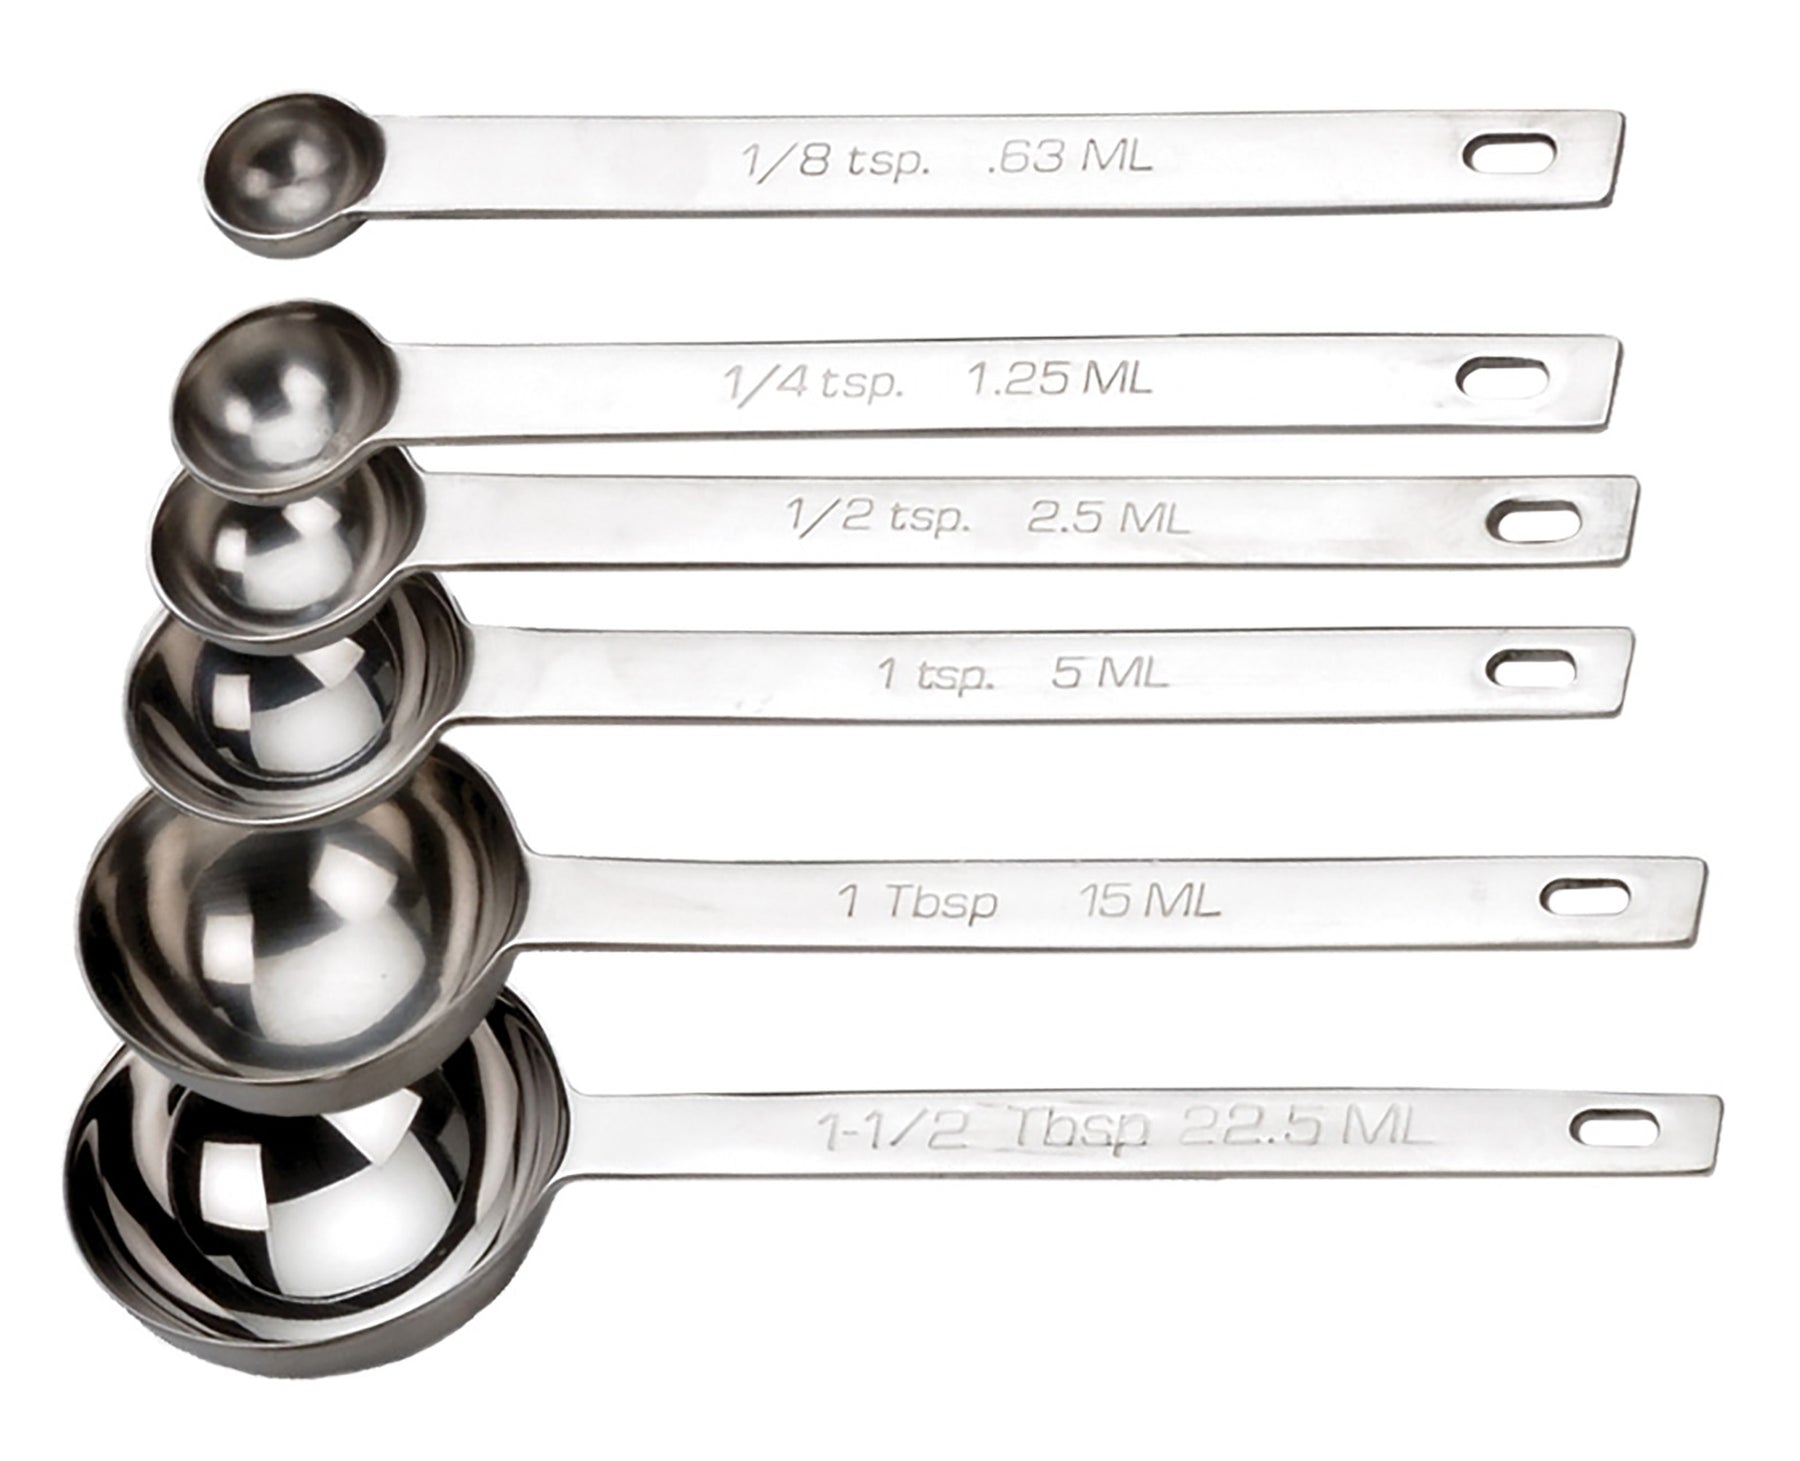 Everyone NEEDS to buy a 1/4 measuring teaspoon!